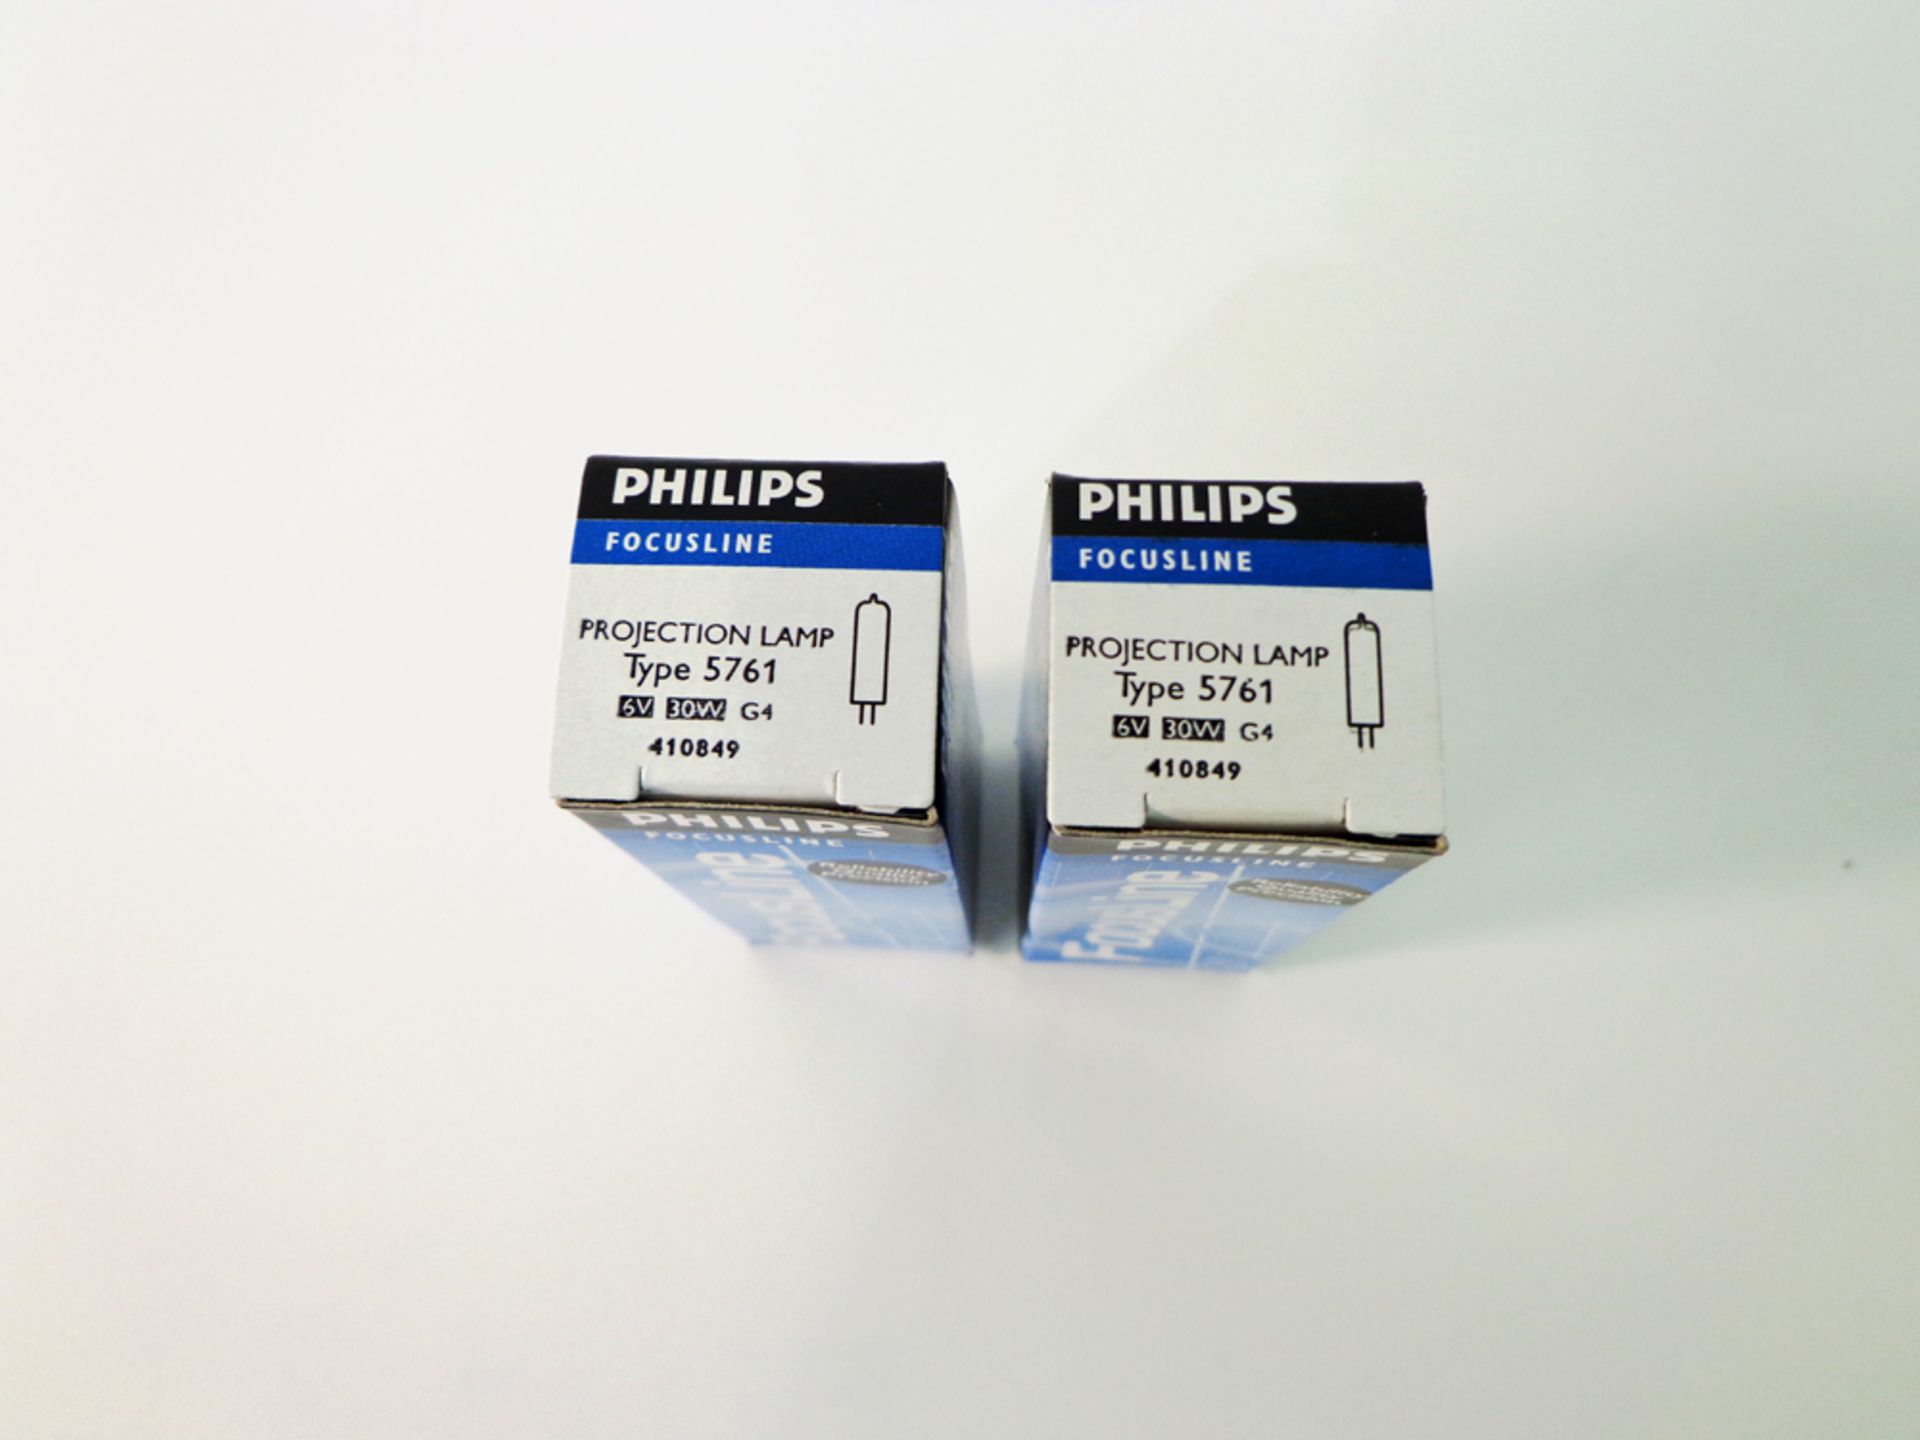 Philips Focusline Projection, White Light (90-100 Ra), Type 5761 30W 6V Halogen Lamp. (WA12931) - Image 2 of 2